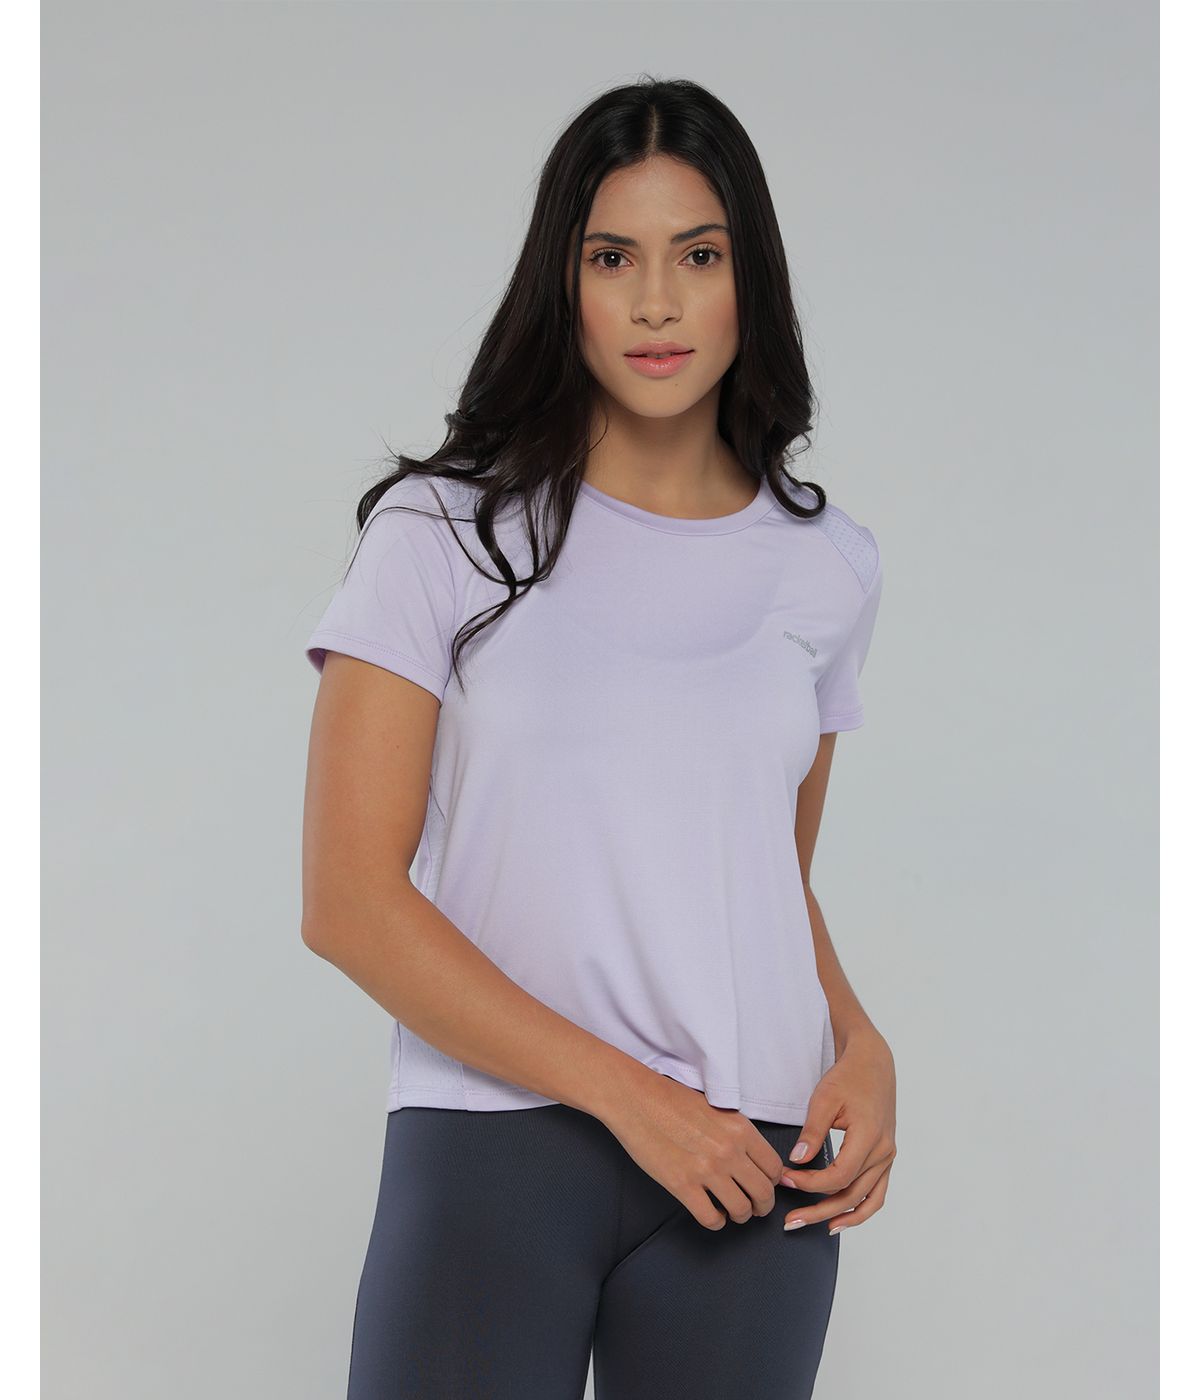 Camiseta deportiva mujer, color lila racketball movil